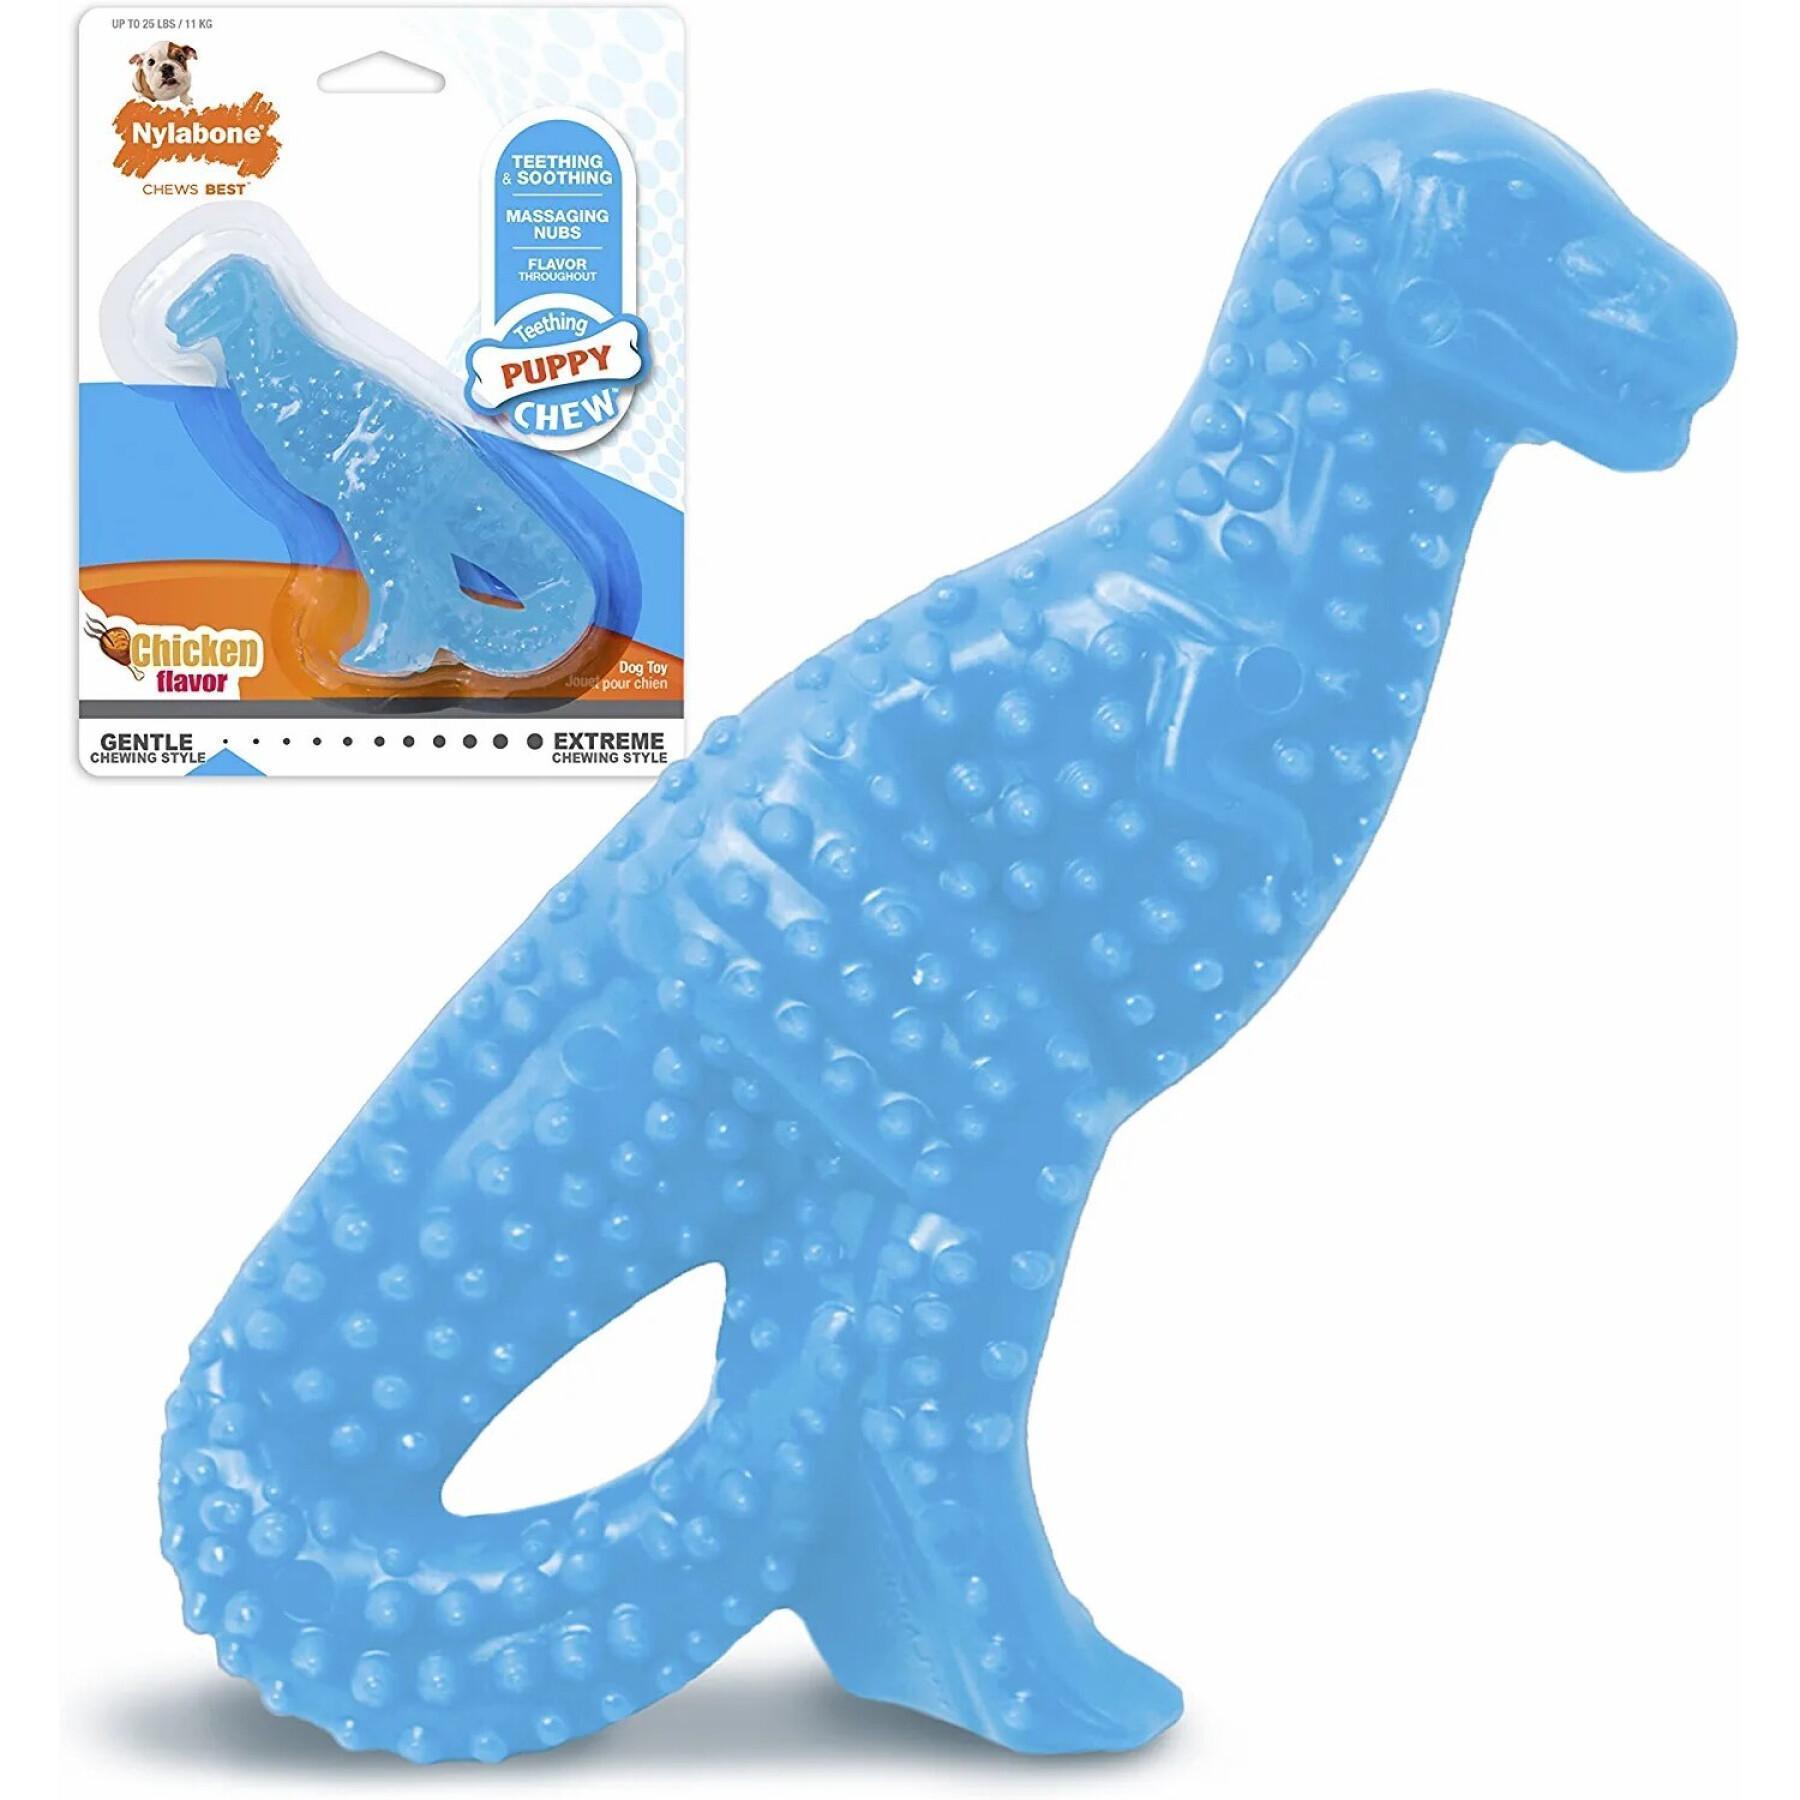 Dog toy Nylabone Puppy Teething Dental Dino - Chicken Flavour S